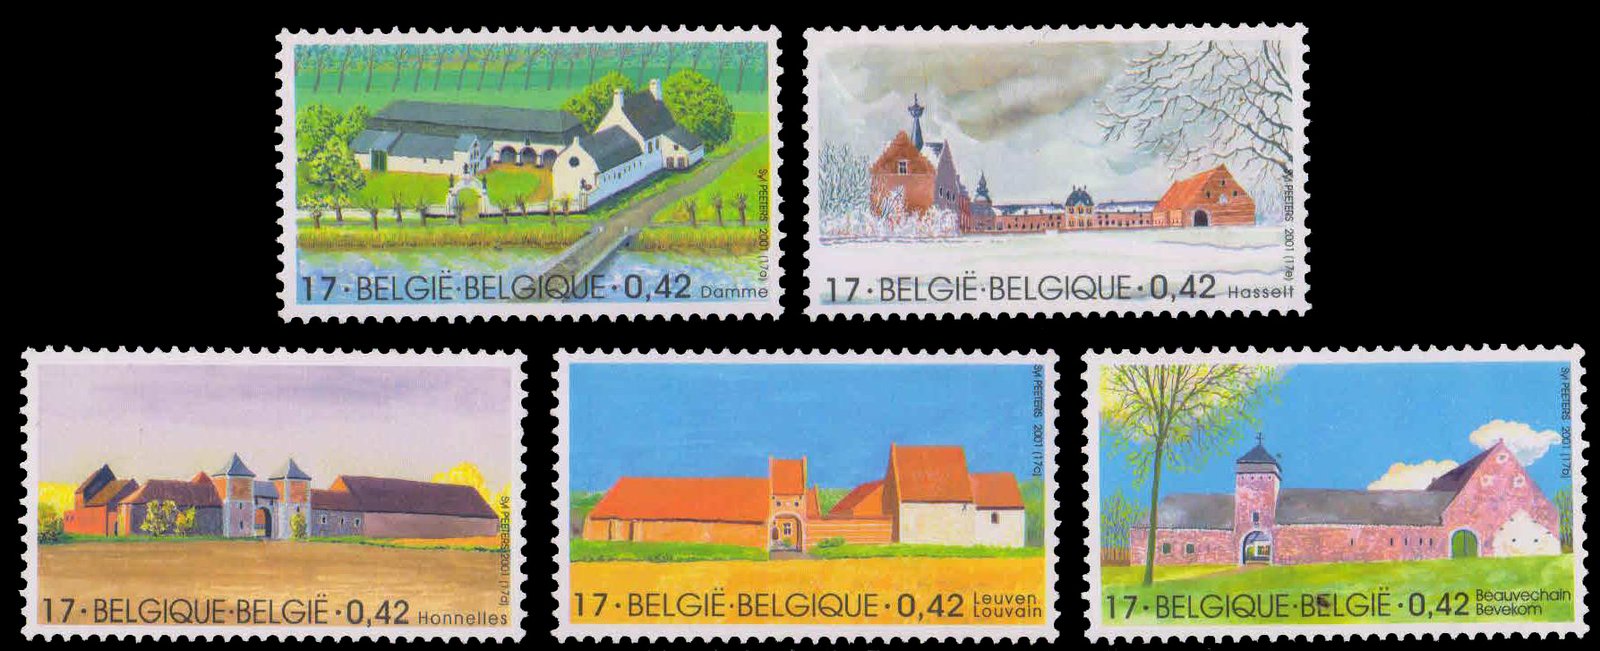 BELGIUM 2001-Large Farm Houses, Set of 5, MNH, S.G. 3649-3653, Cat £ 8-